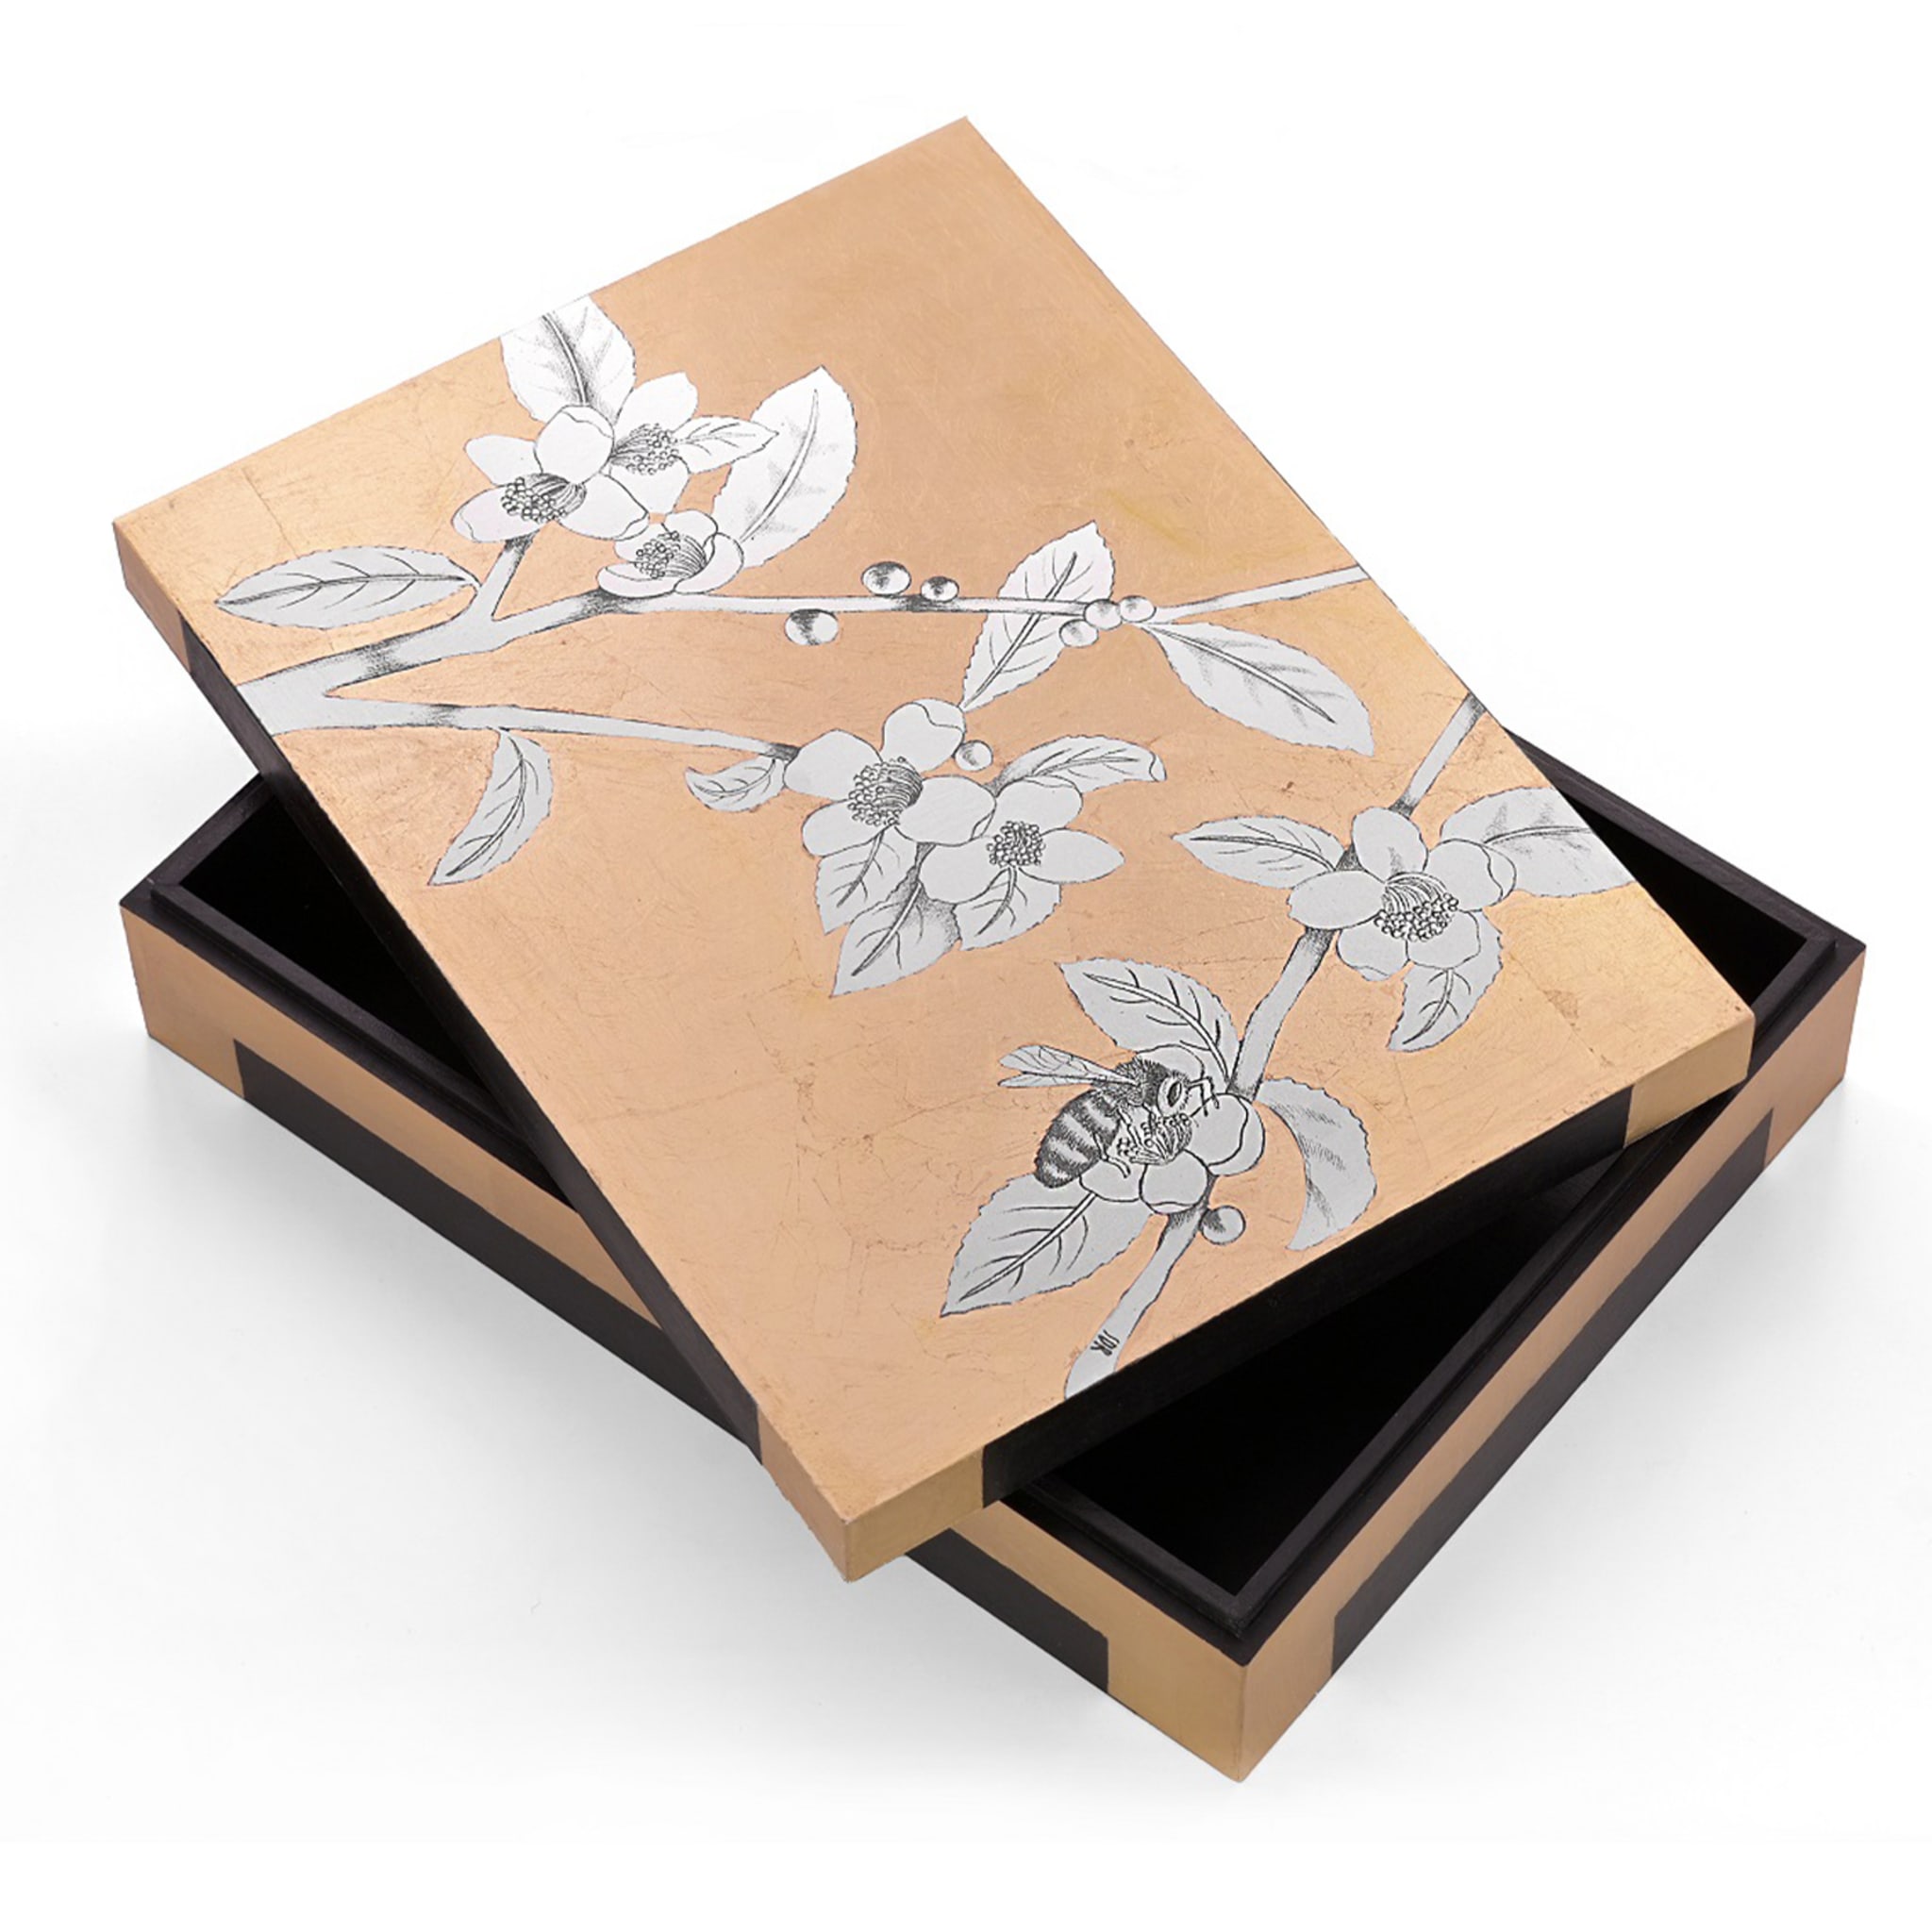 Casarialto Atelier Bee in a golden Sky box by Stefania Dei Rossi - Alternative view 1